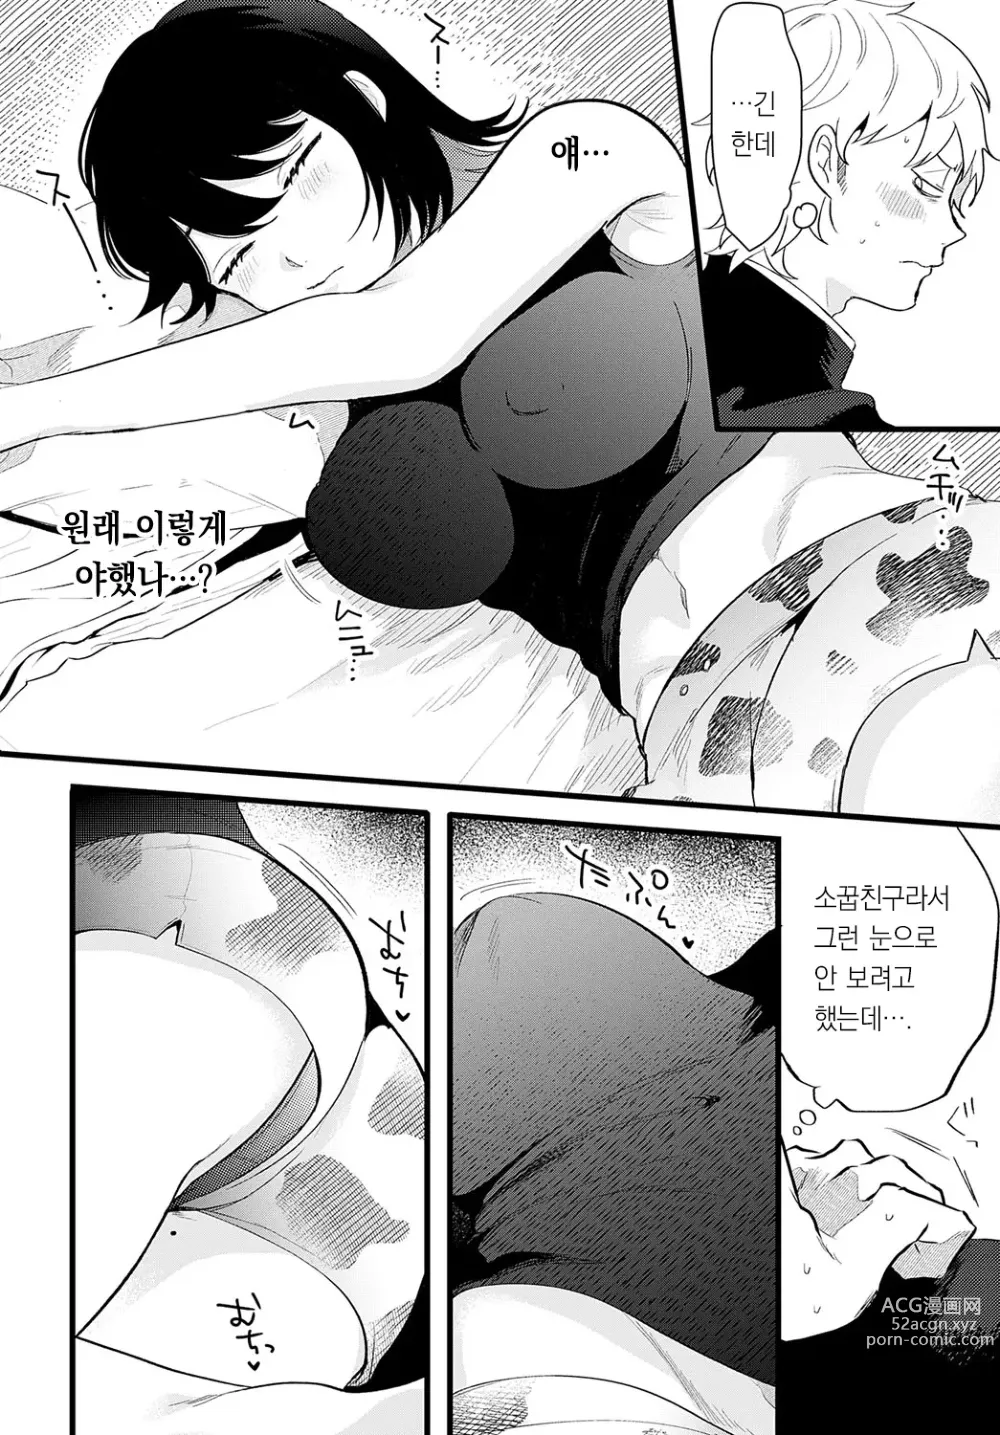 Page 9 of manga 꼬옥 하고 쪼옥